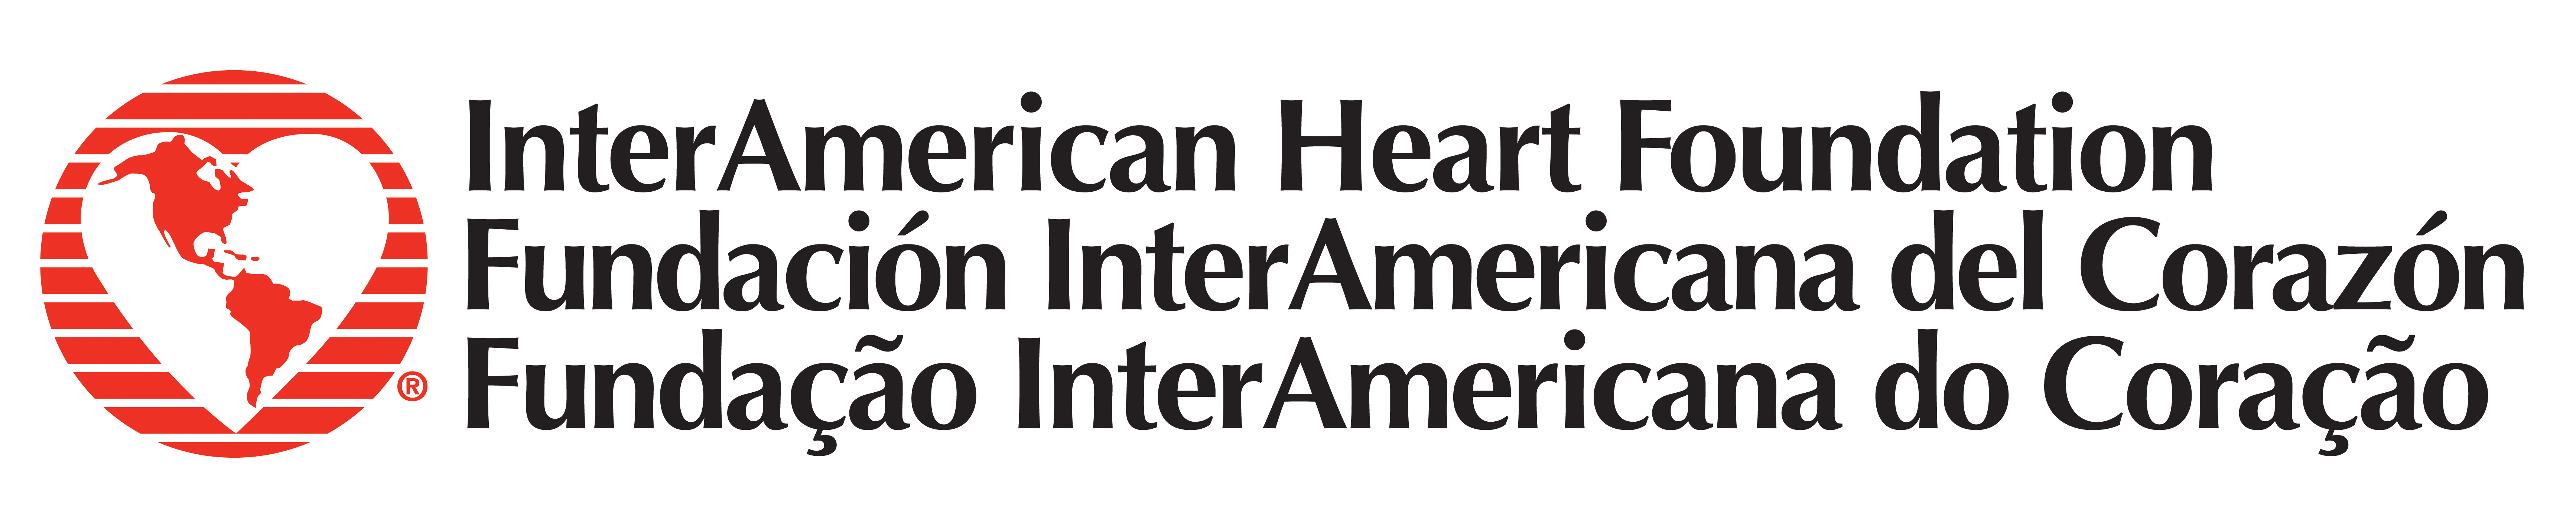 Interamerican Heart Foundation<br><small>(Friend of the coalition)</small>